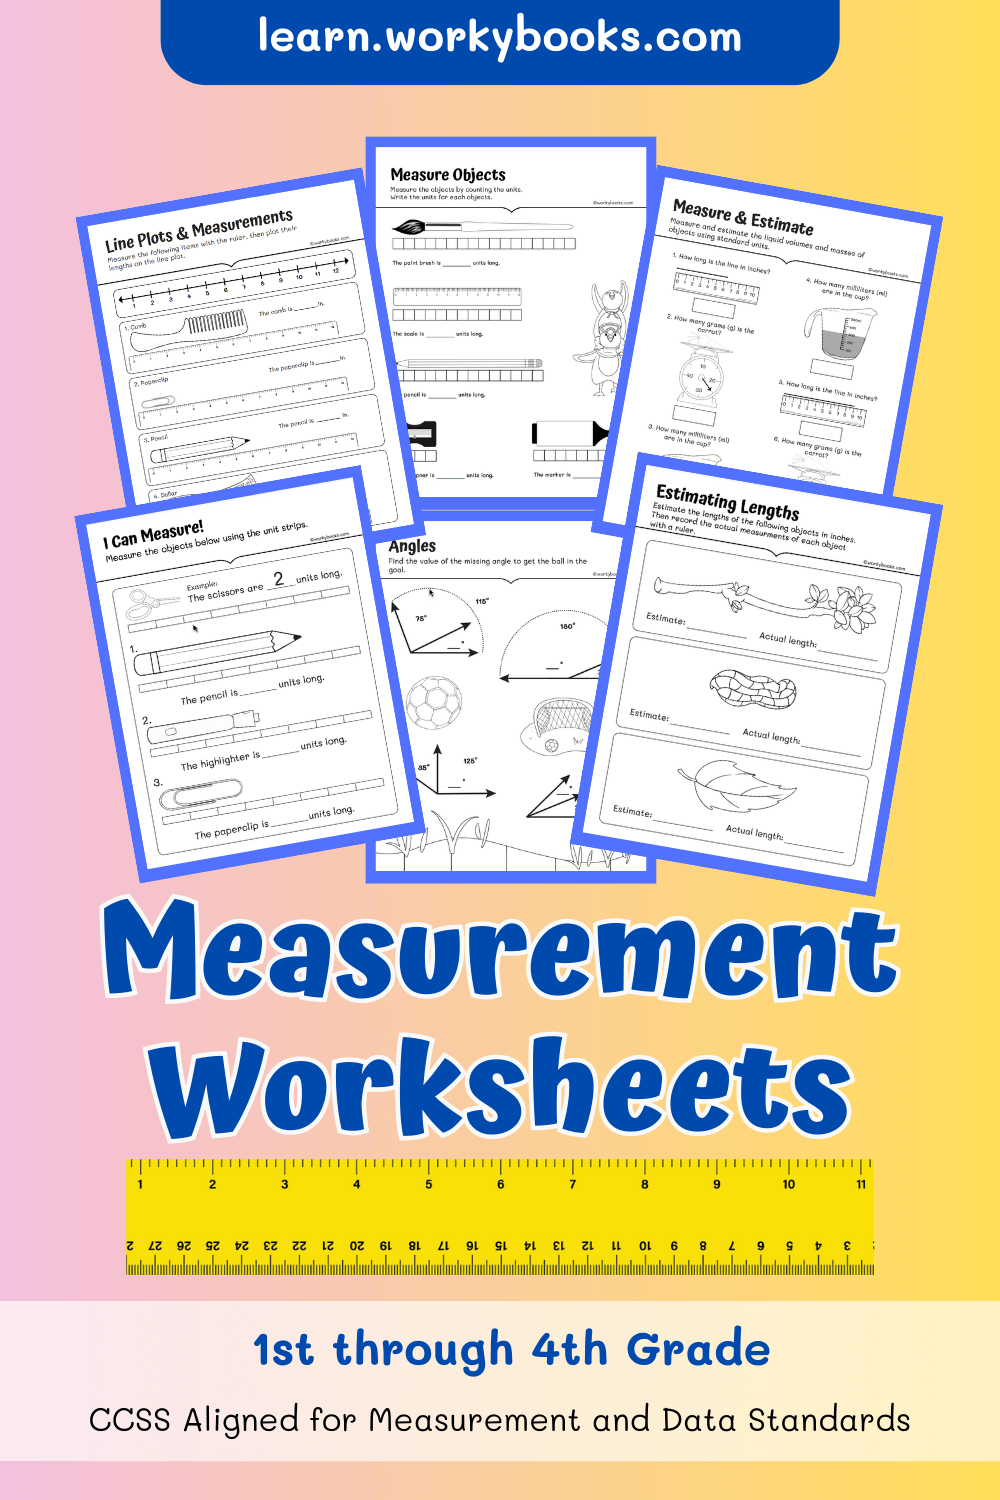 measurment and data worksheets